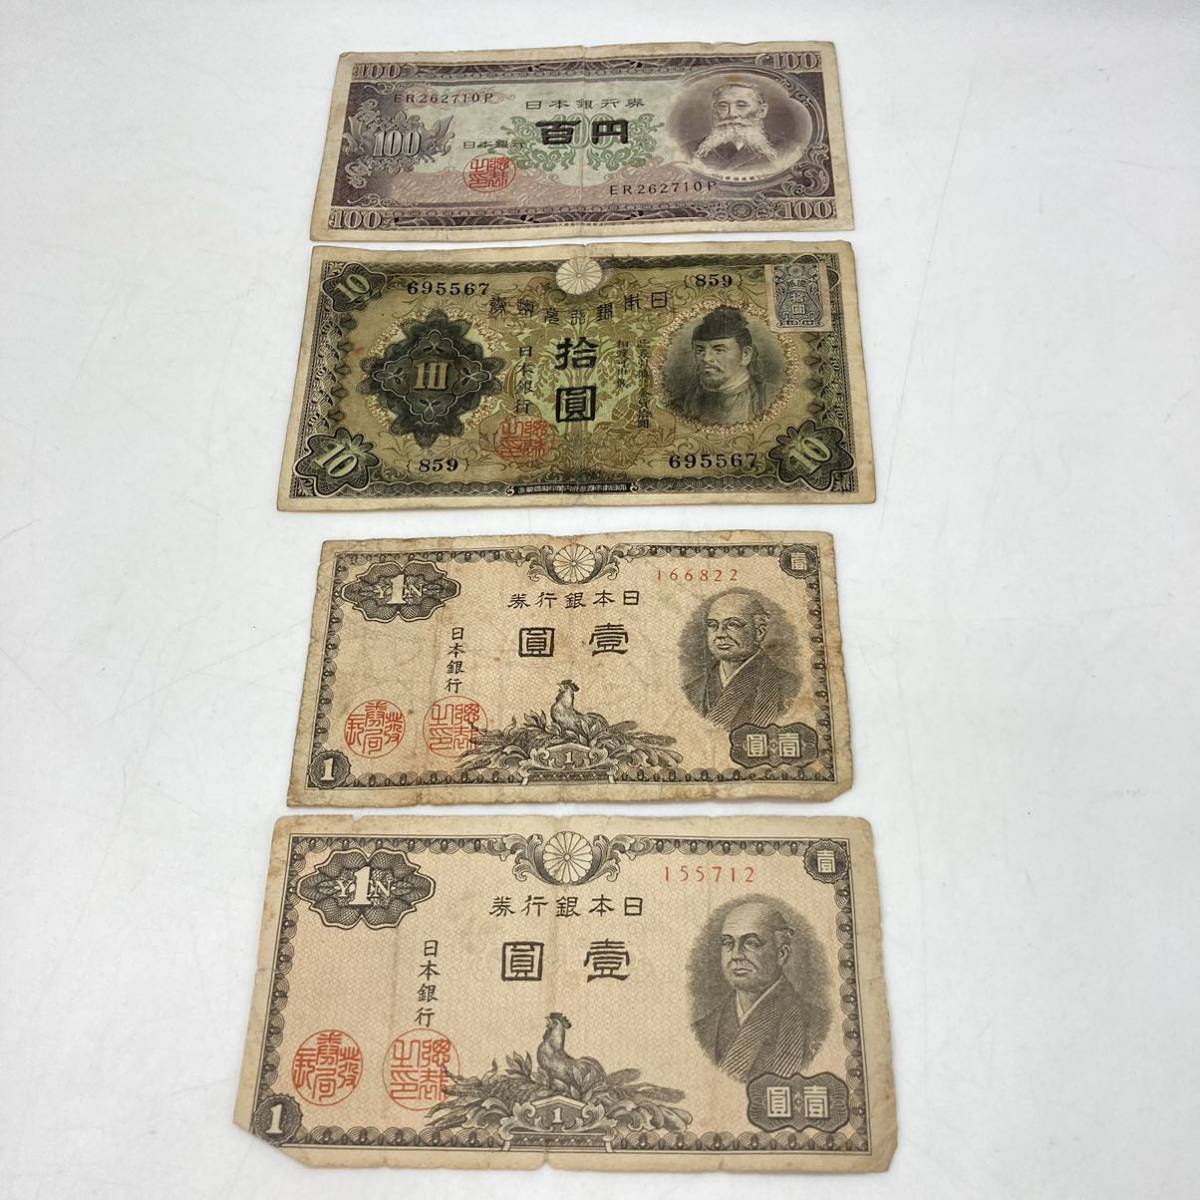 日本紙幣16枚 | www.avredentor.com.br